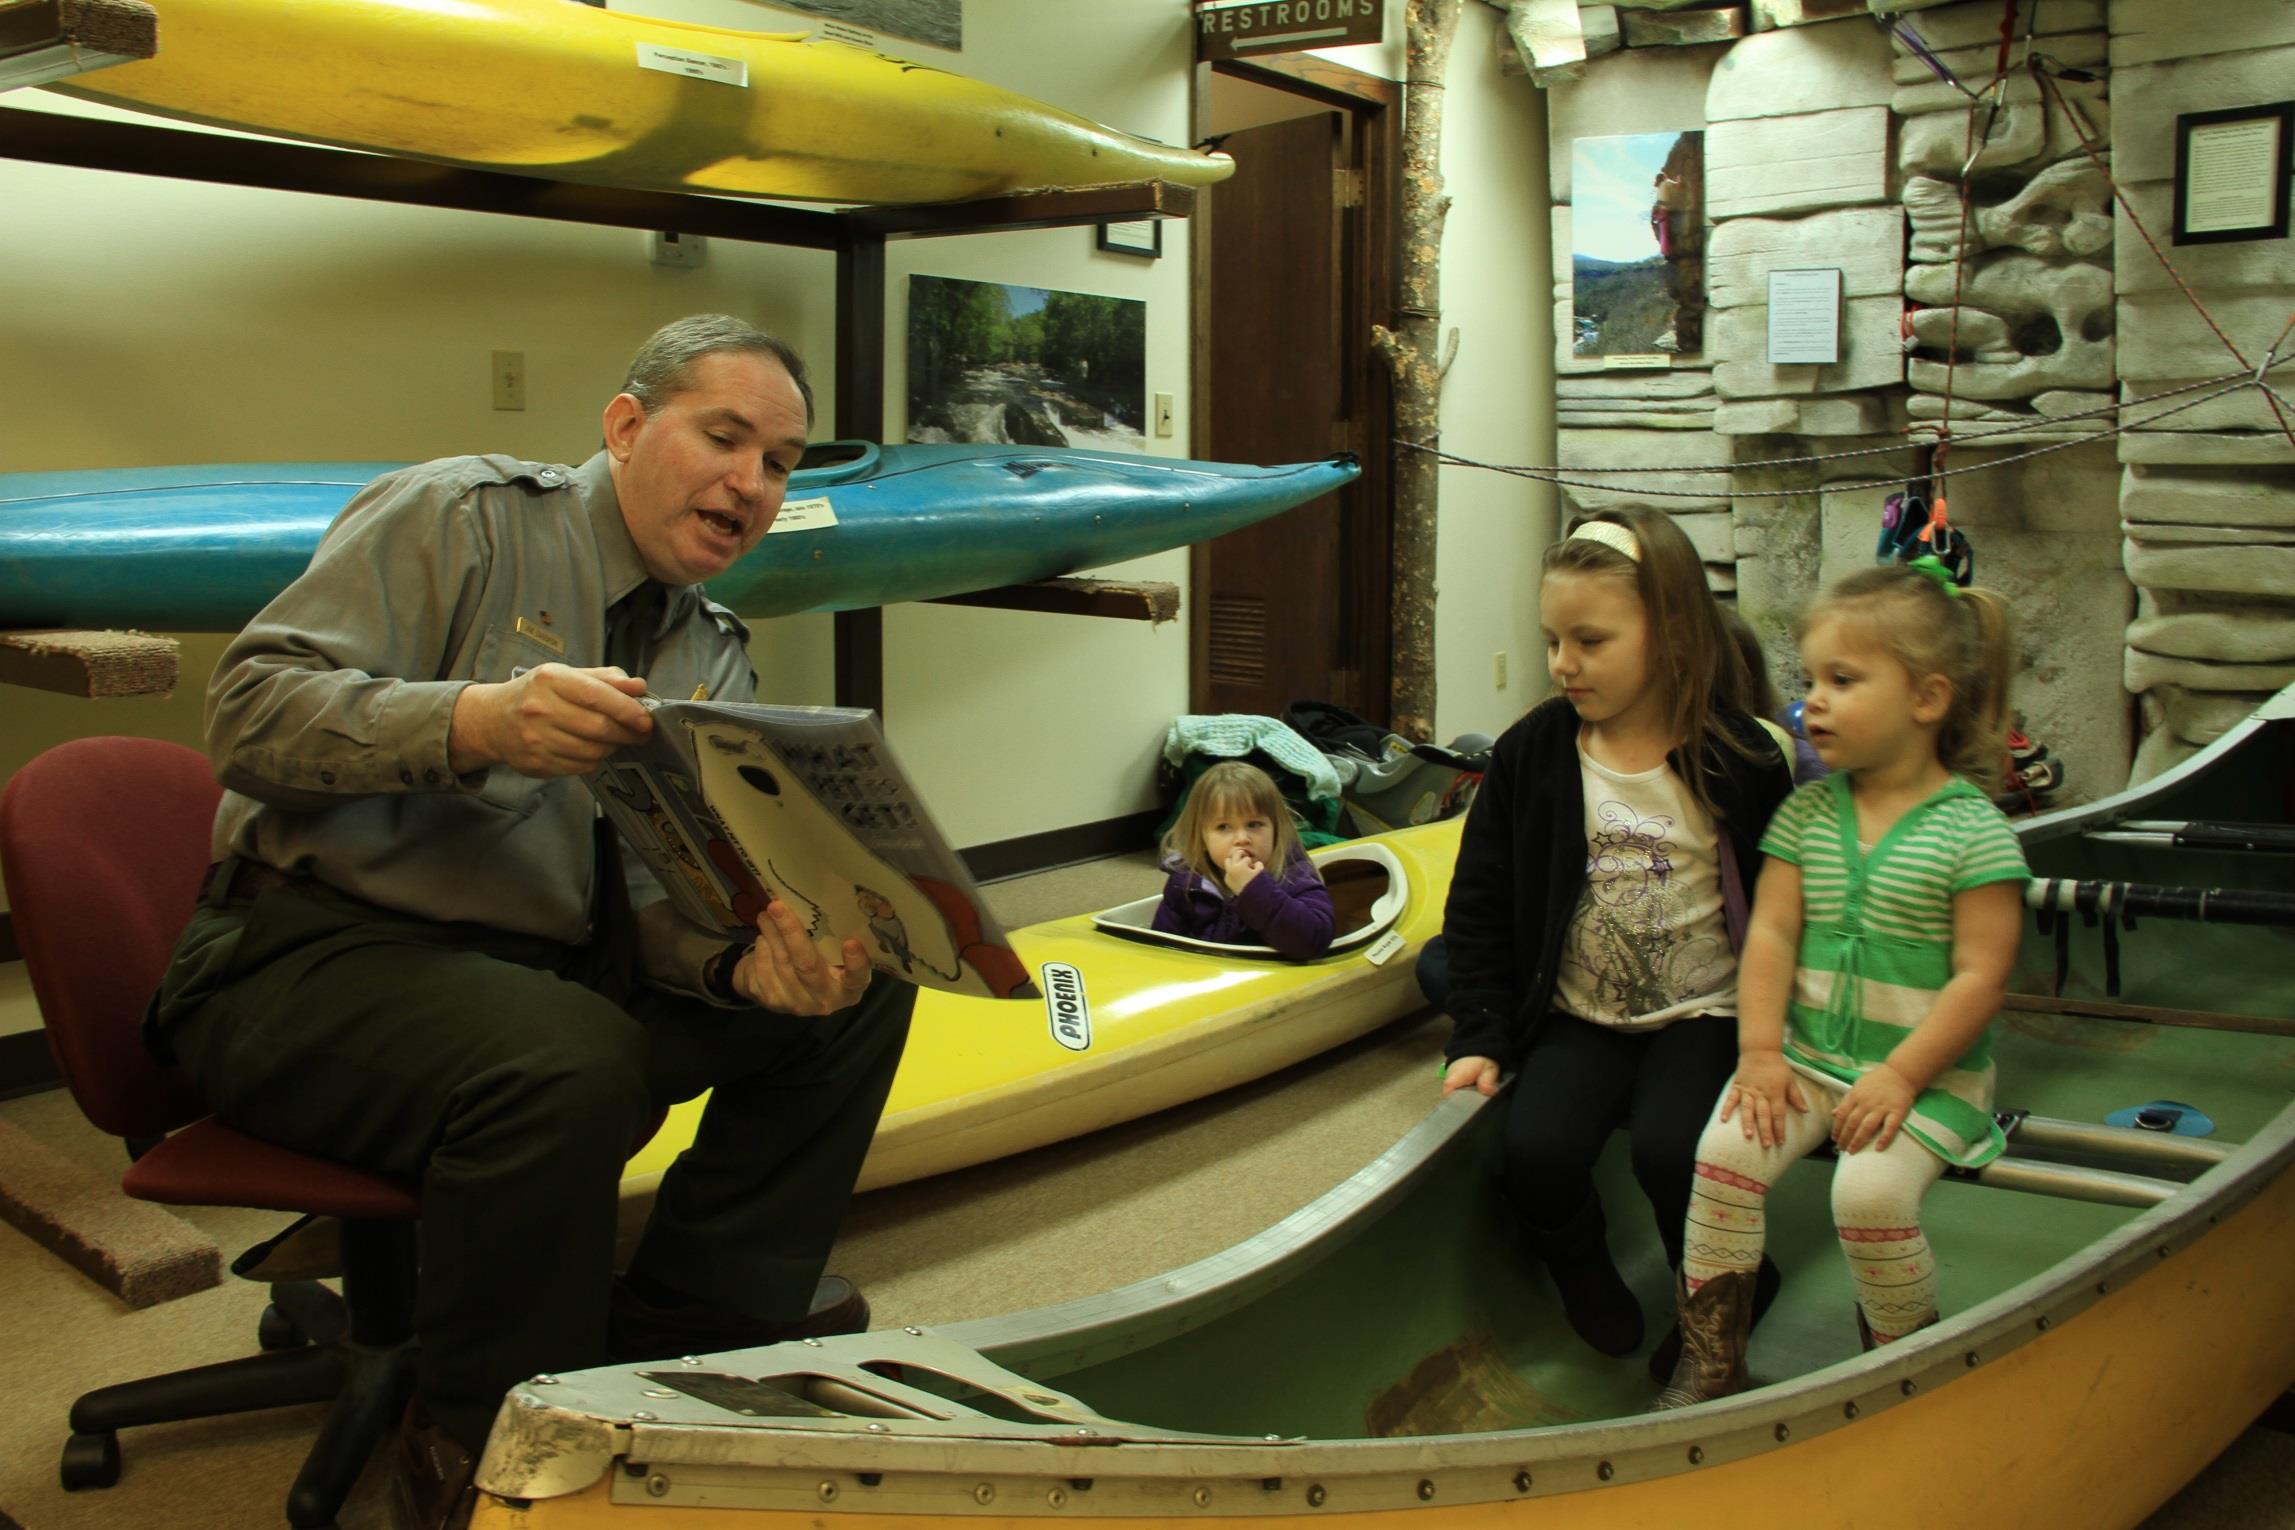 Ranger Joe reading to two little girls sitting in a yellow canoe